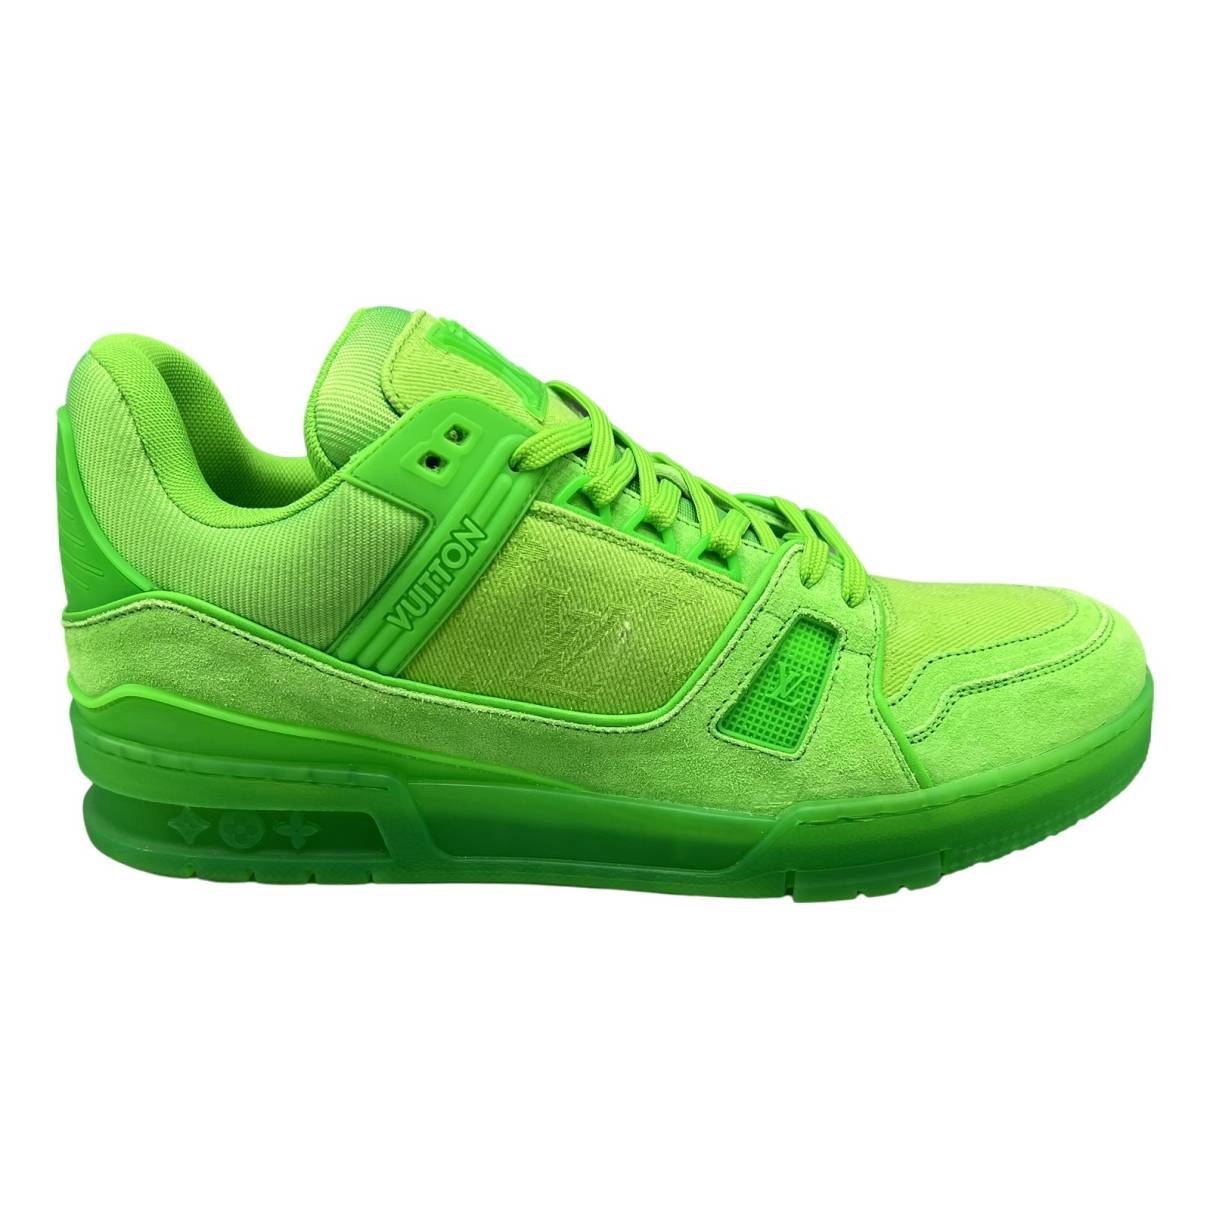 louis vuitton shoes green